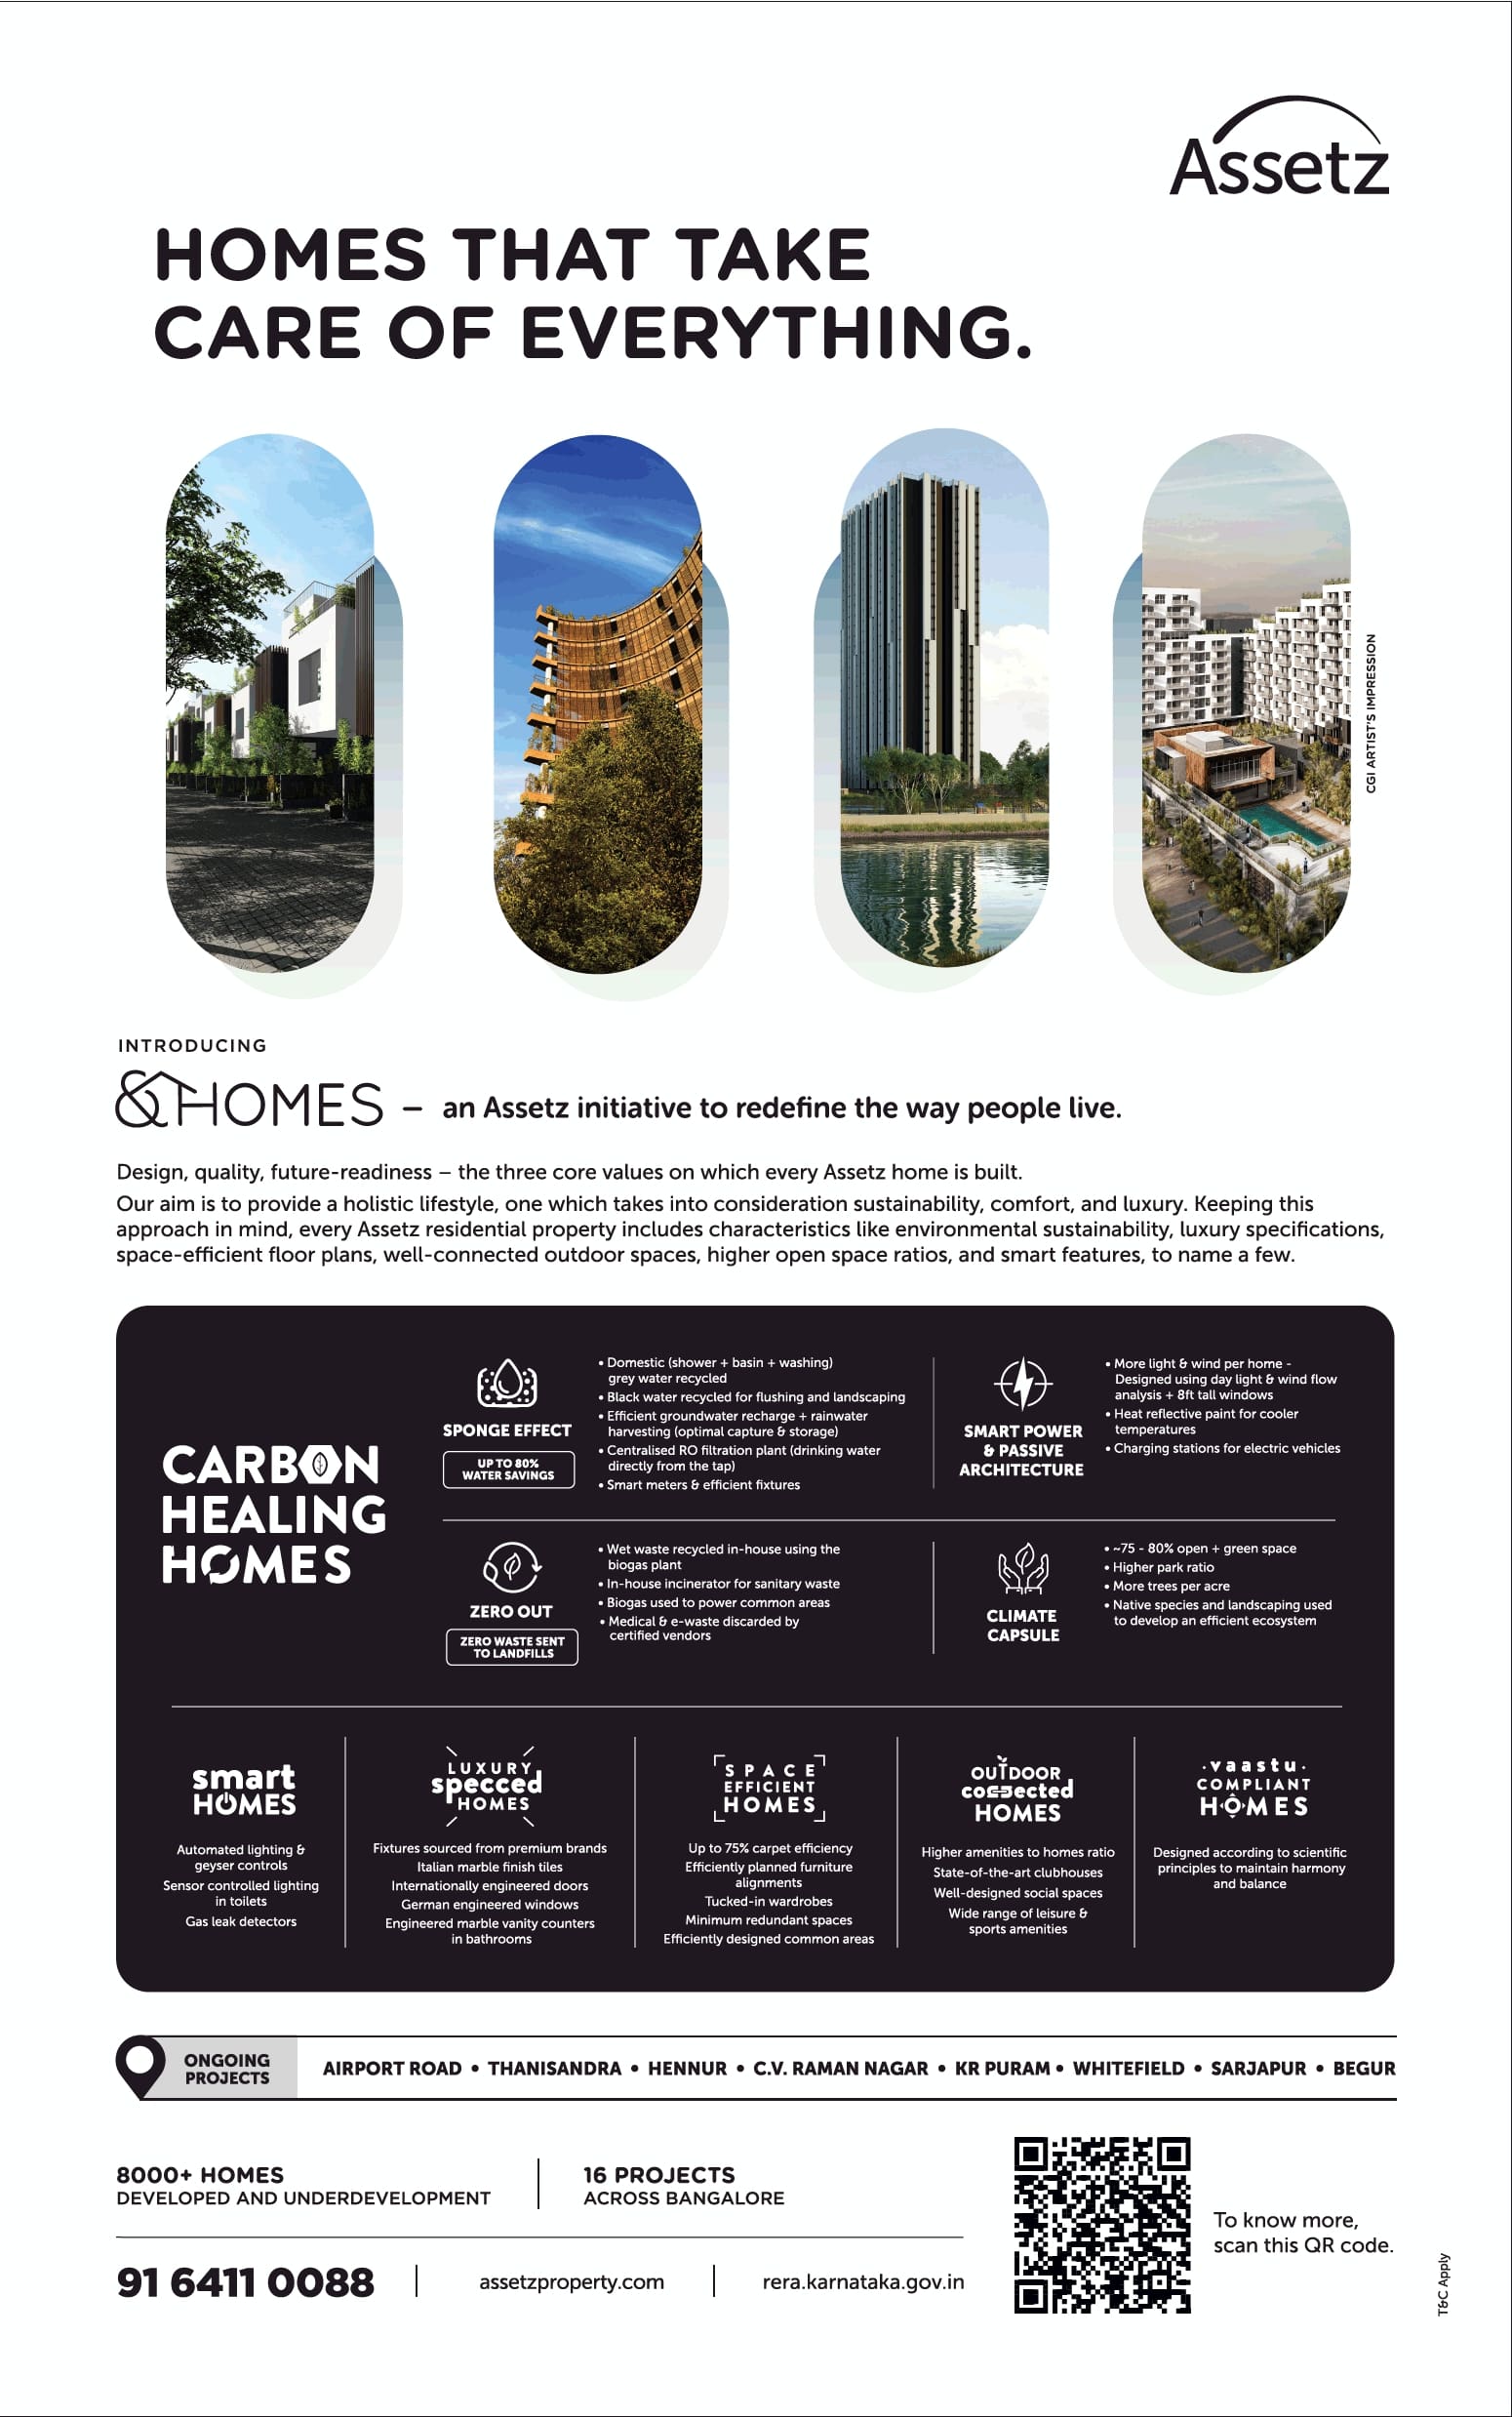 assetz-introducing-&homes-carbon-healing-homes-ad-toi-bangalore-1-11-2020